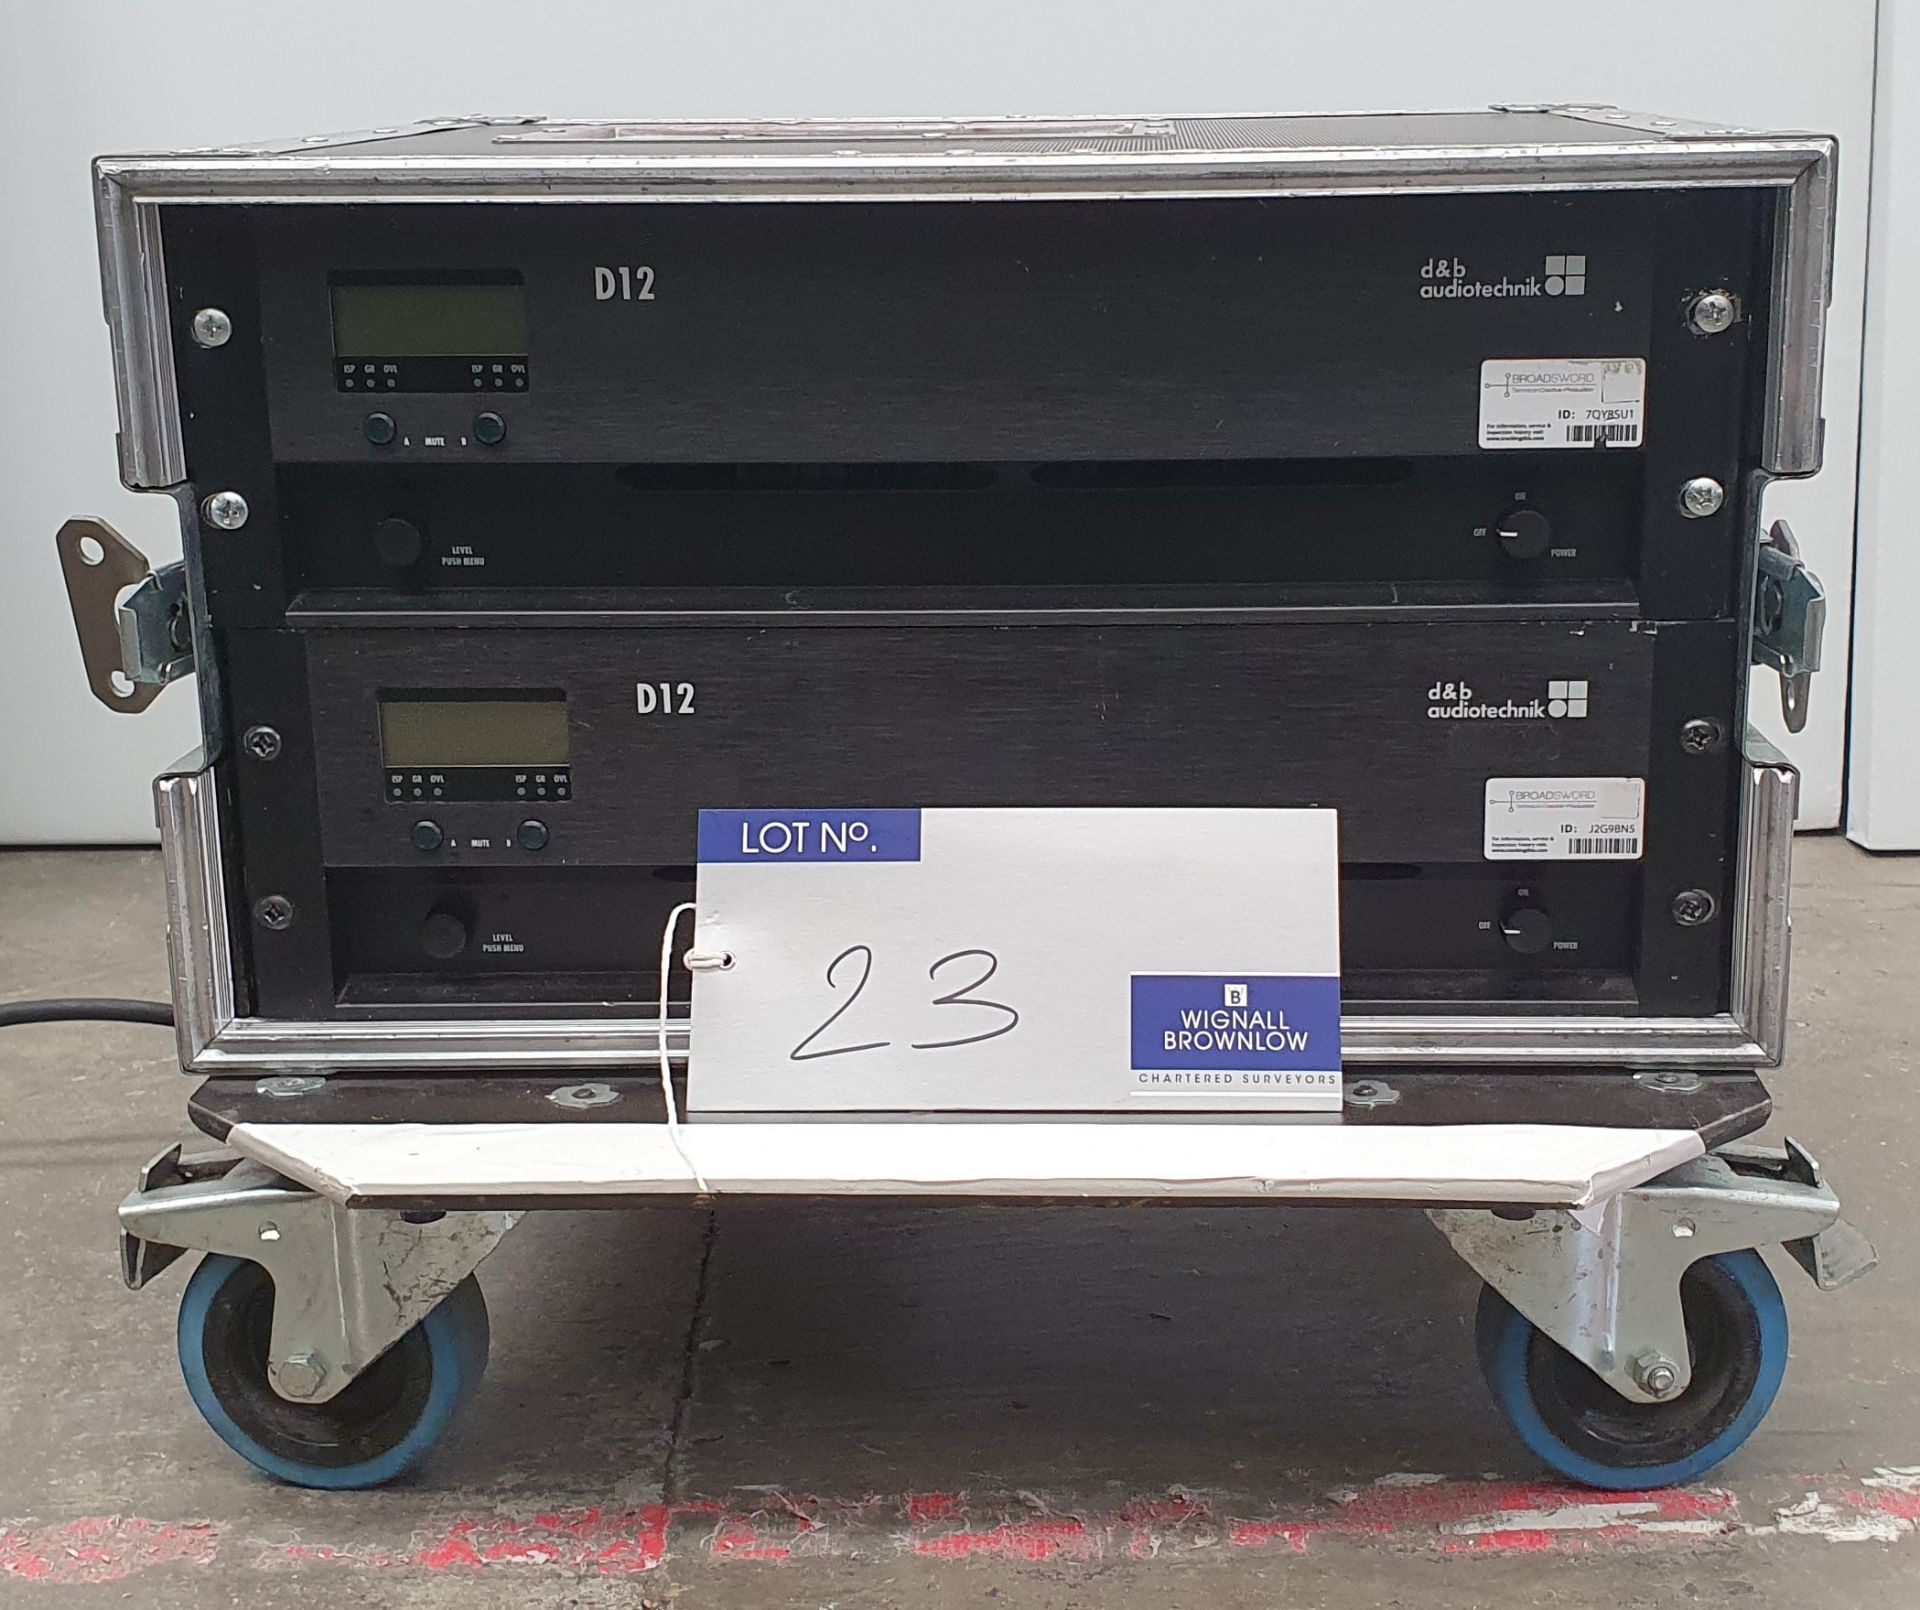 2 d+b audiotechnik D12 Dual Channel Amplifiers in flight case (tested). - Image 2 of 4